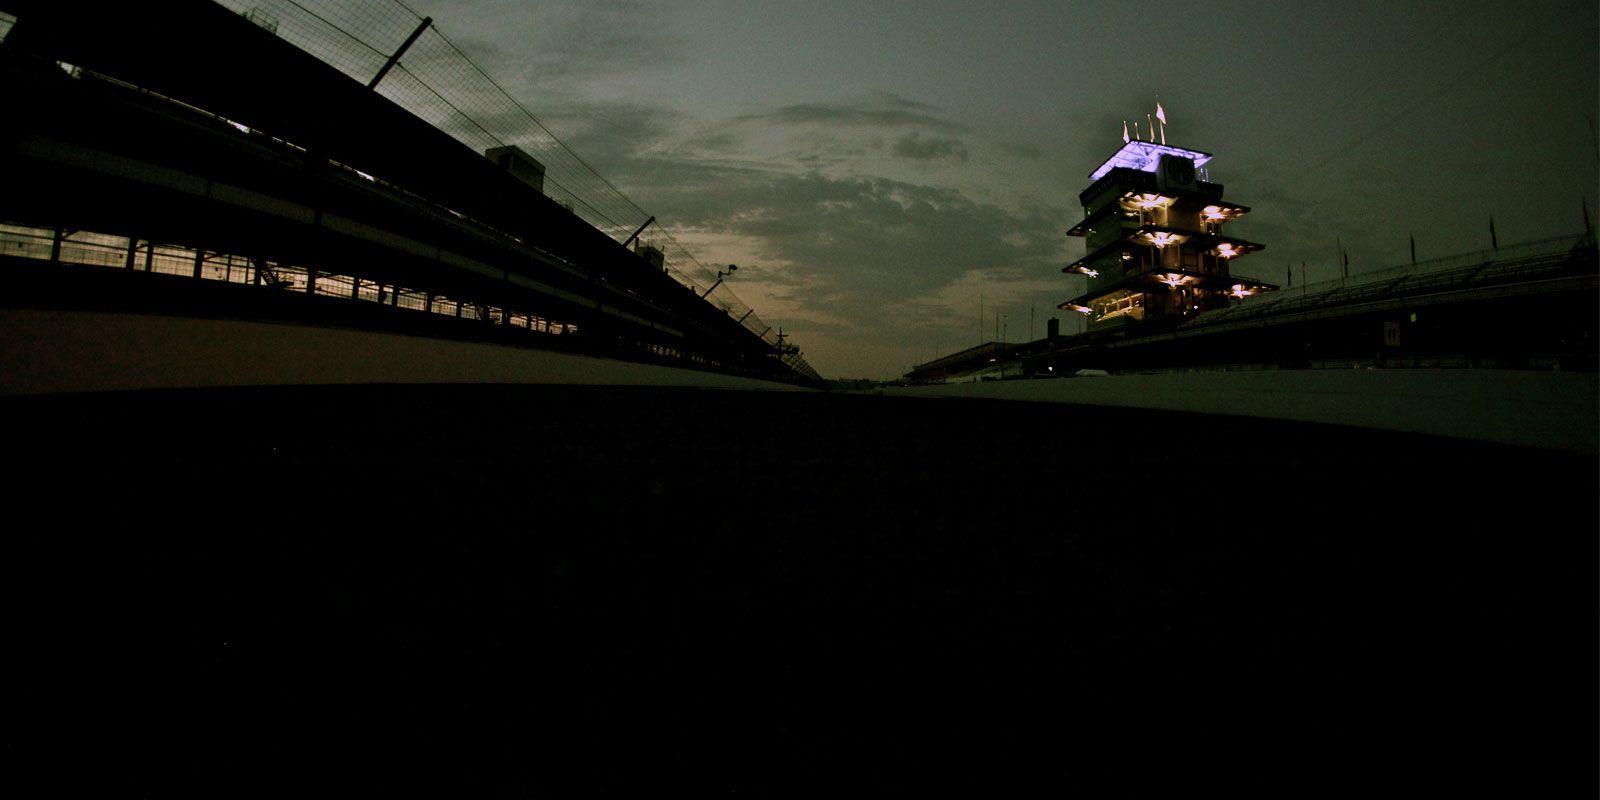 Indianapolis 500 Motor Speedway